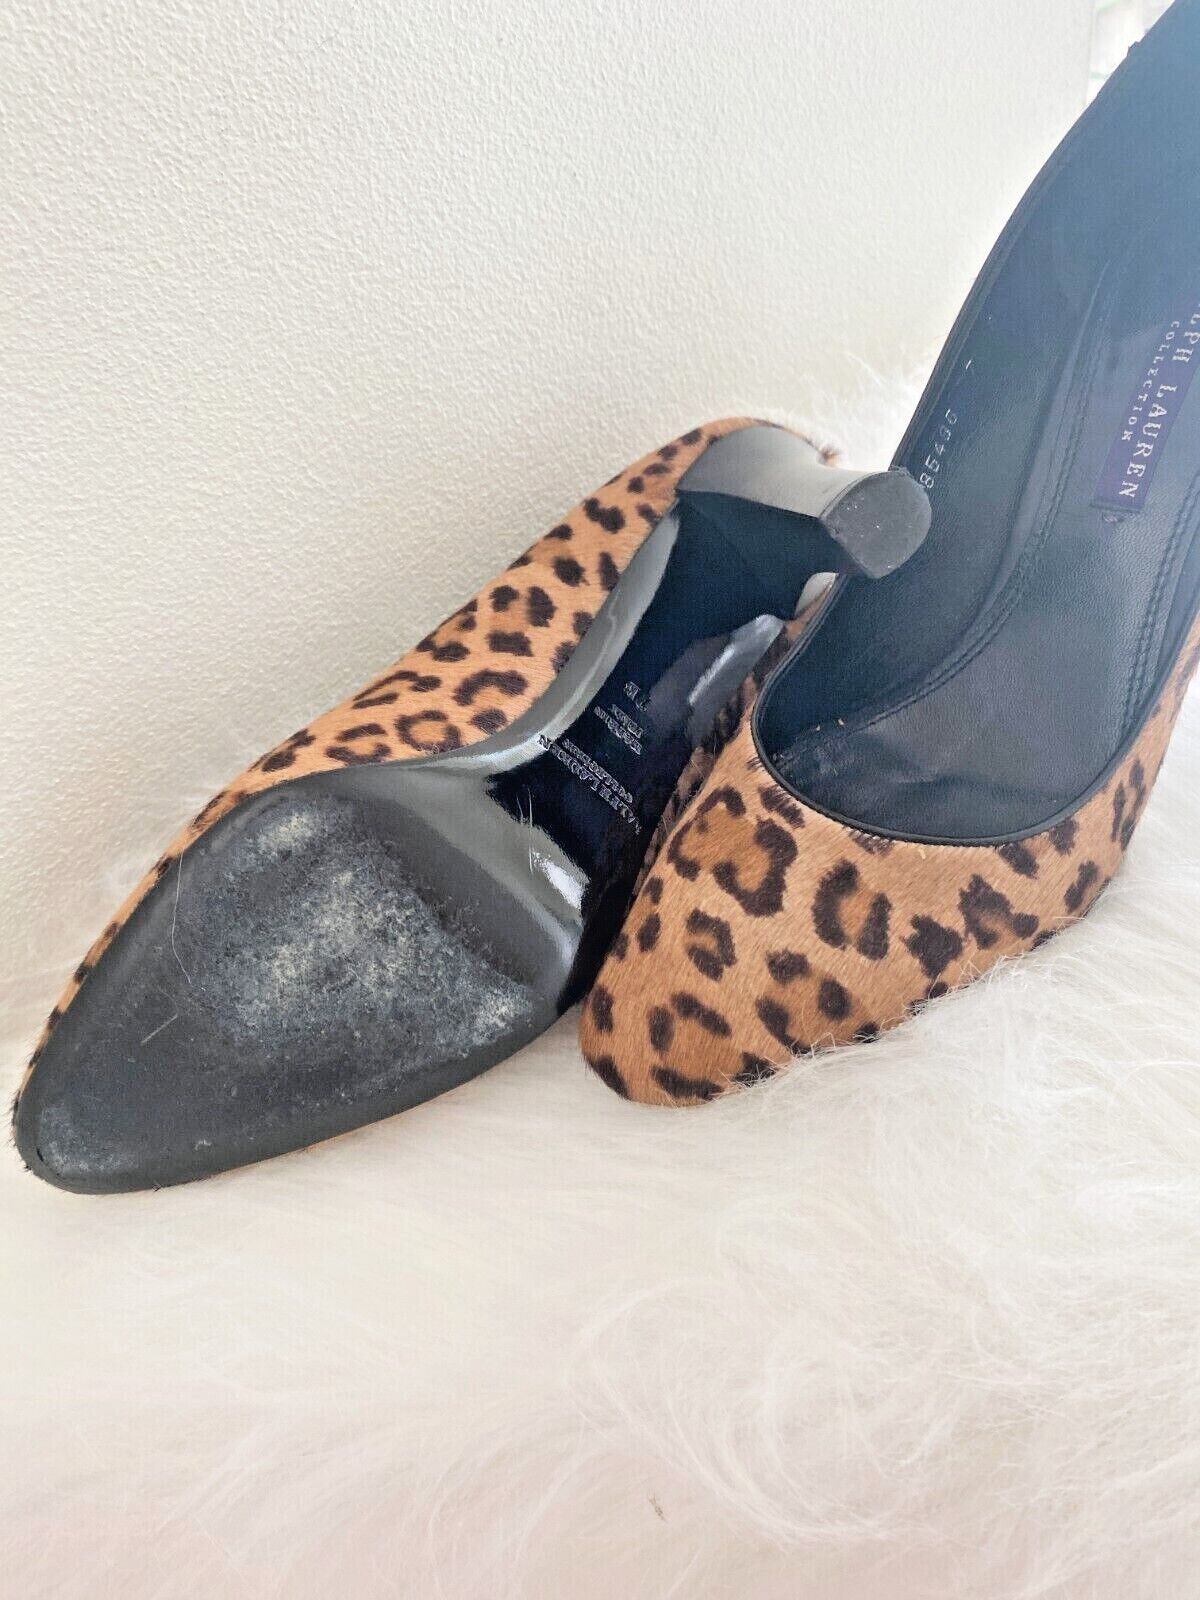 Ralph Lauren Collection Leopard Print Heels | Pumps Leather, Size US 7, Leather